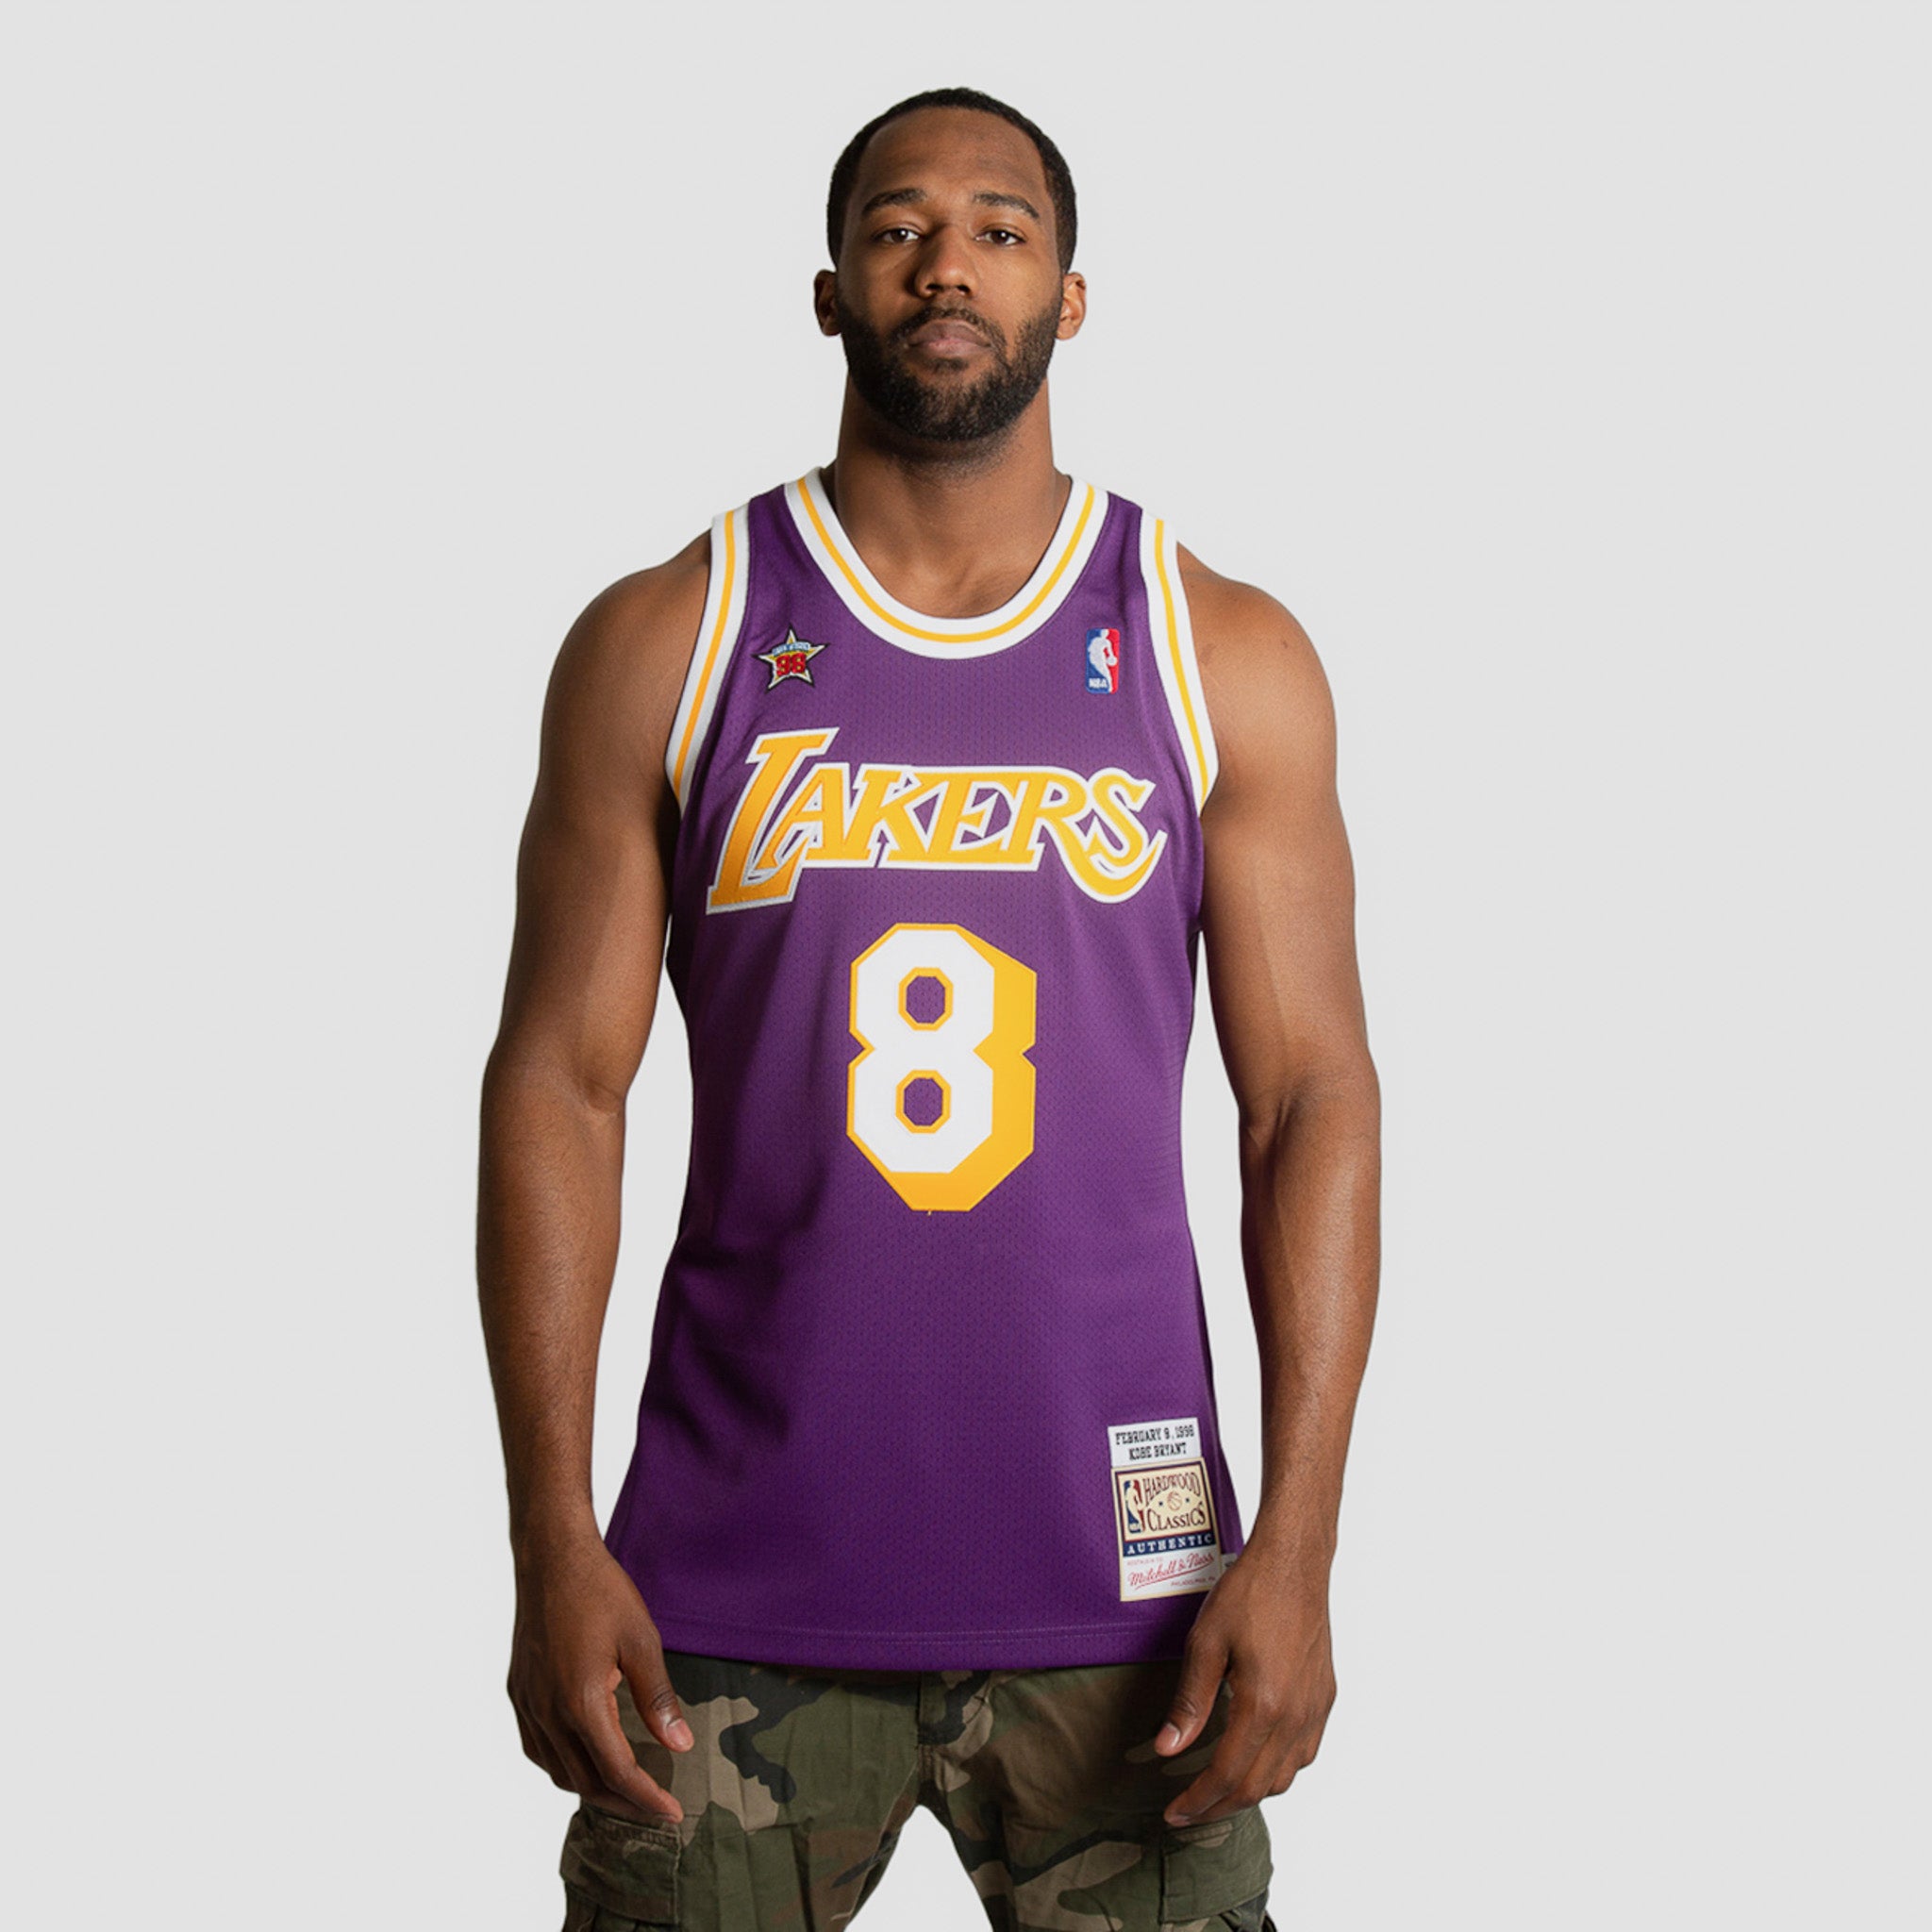 Lakers Kobe Bryant Sticker 8 Basketball Decals NBA Jersey Truck